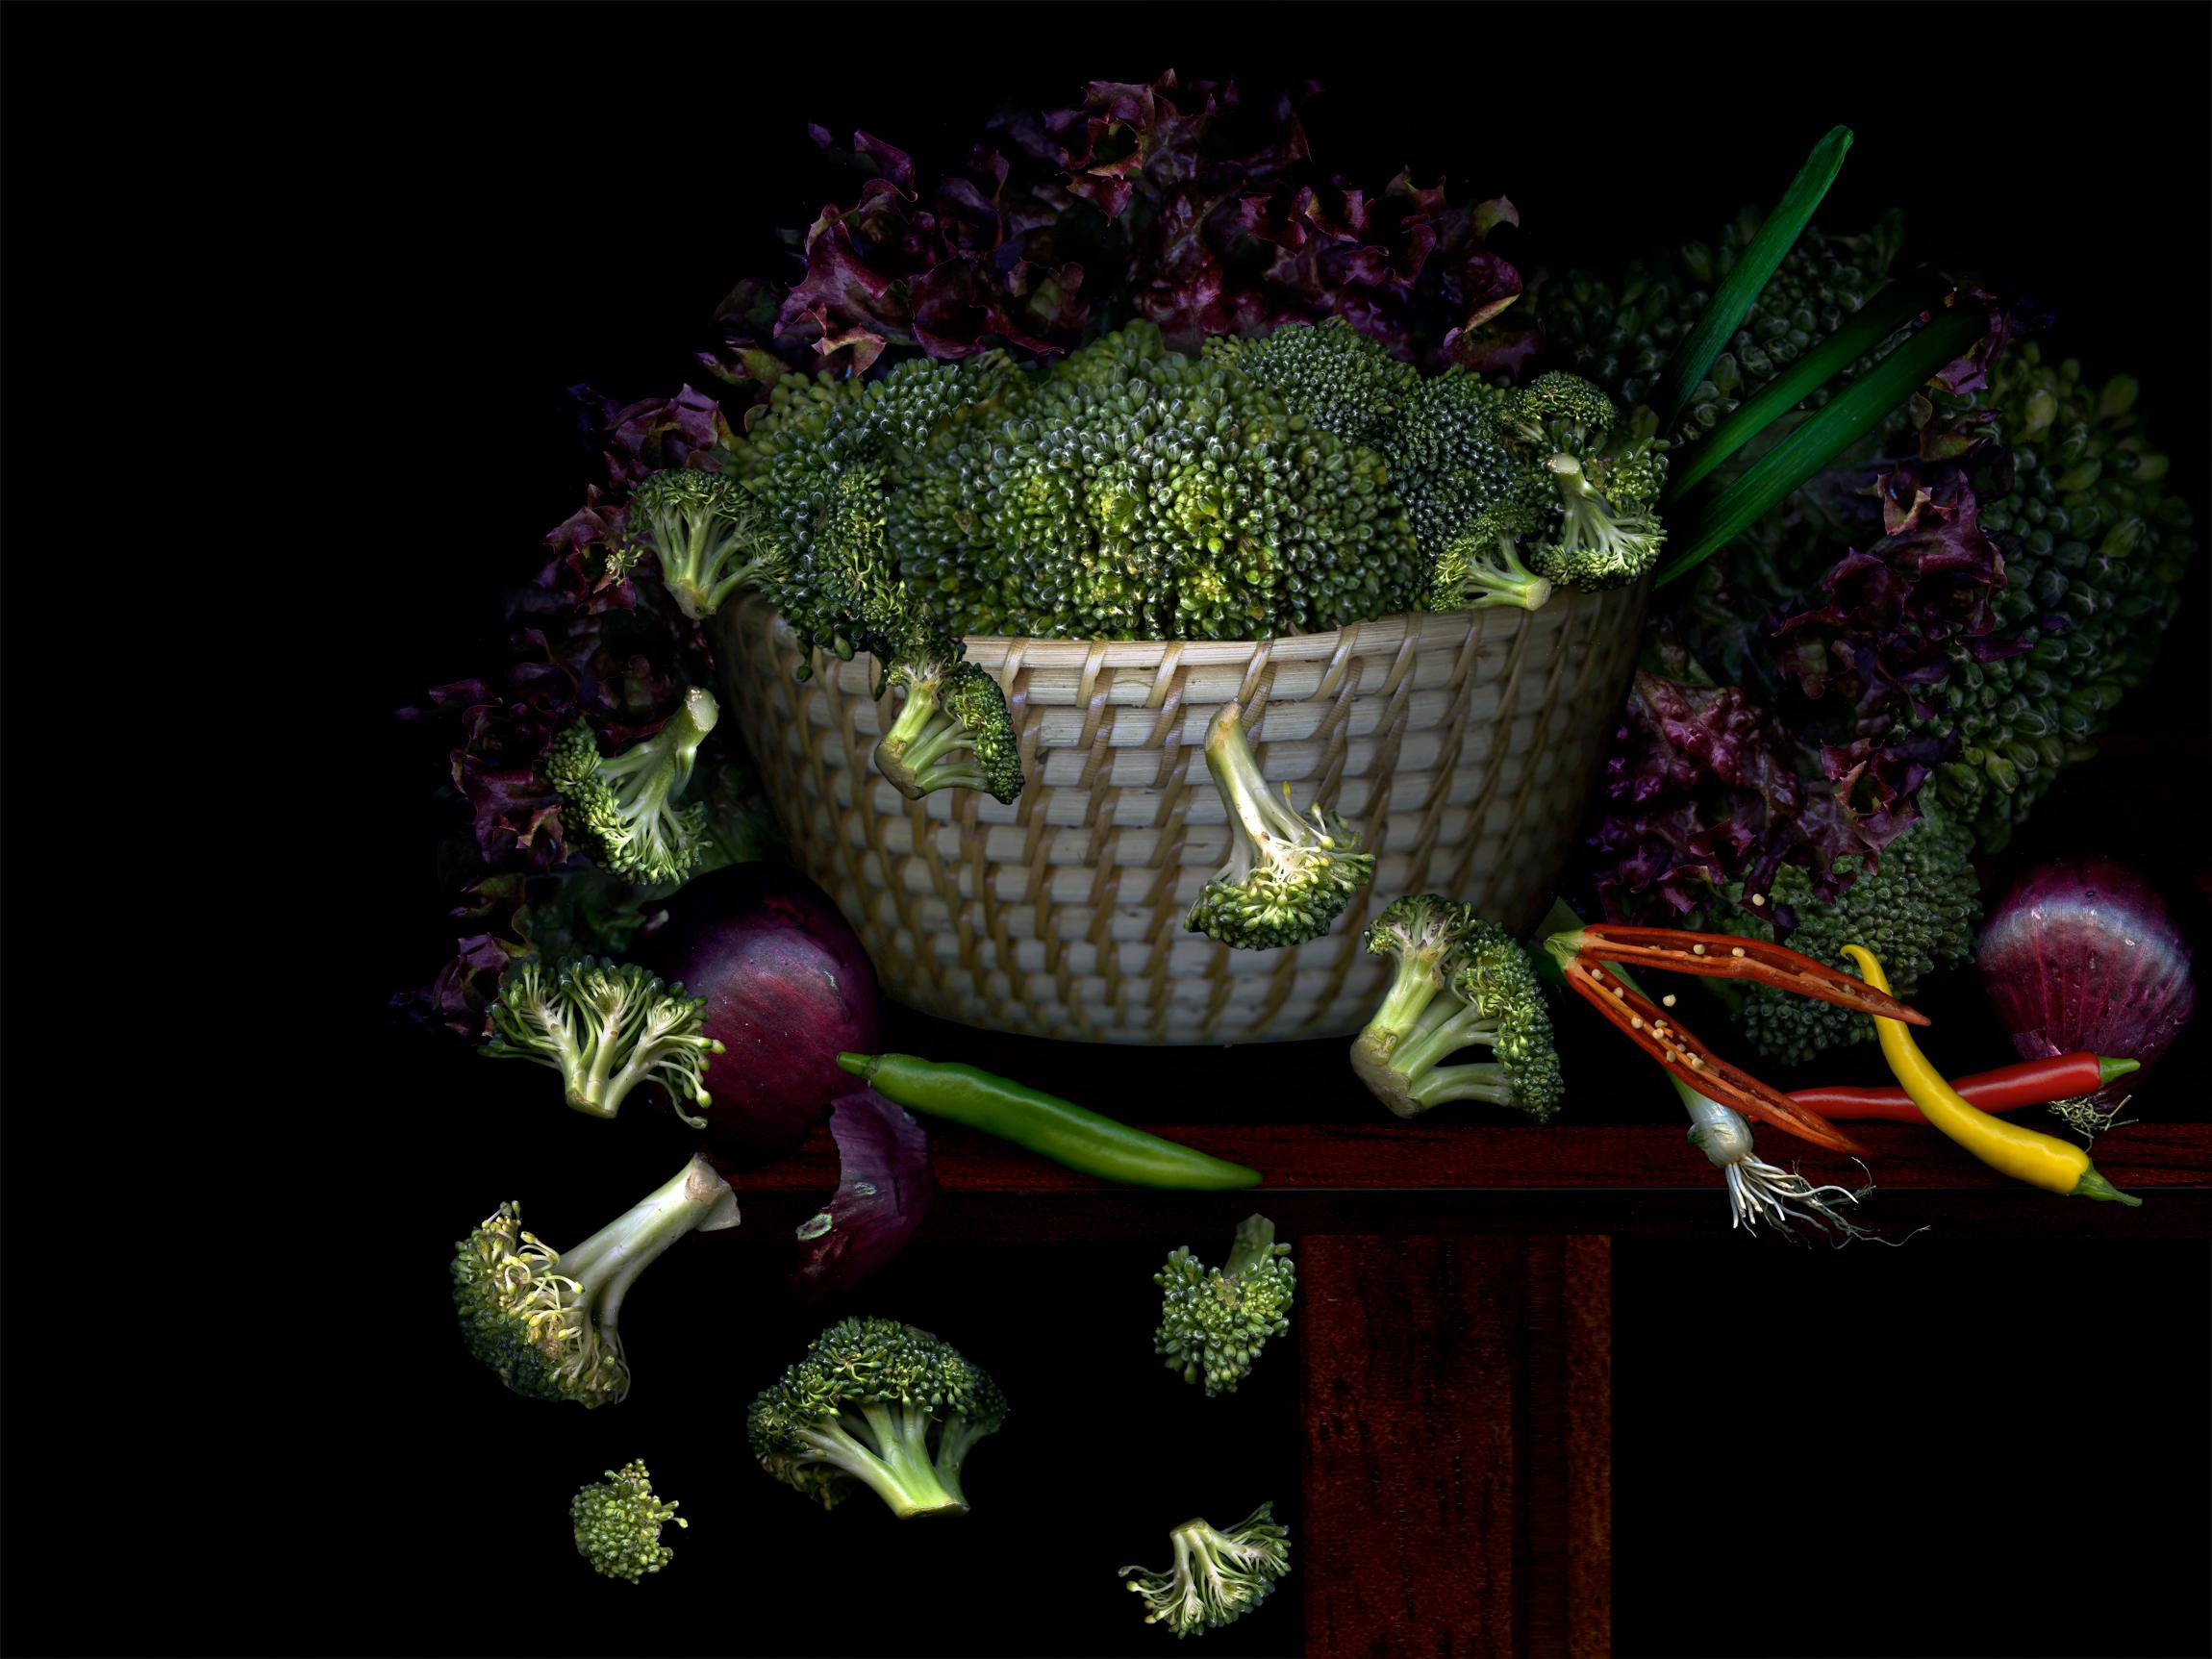 Zoltan Gerliczki Still-Life Photograph - Vegetables from my garden #6 Digital Collage Color Photograph